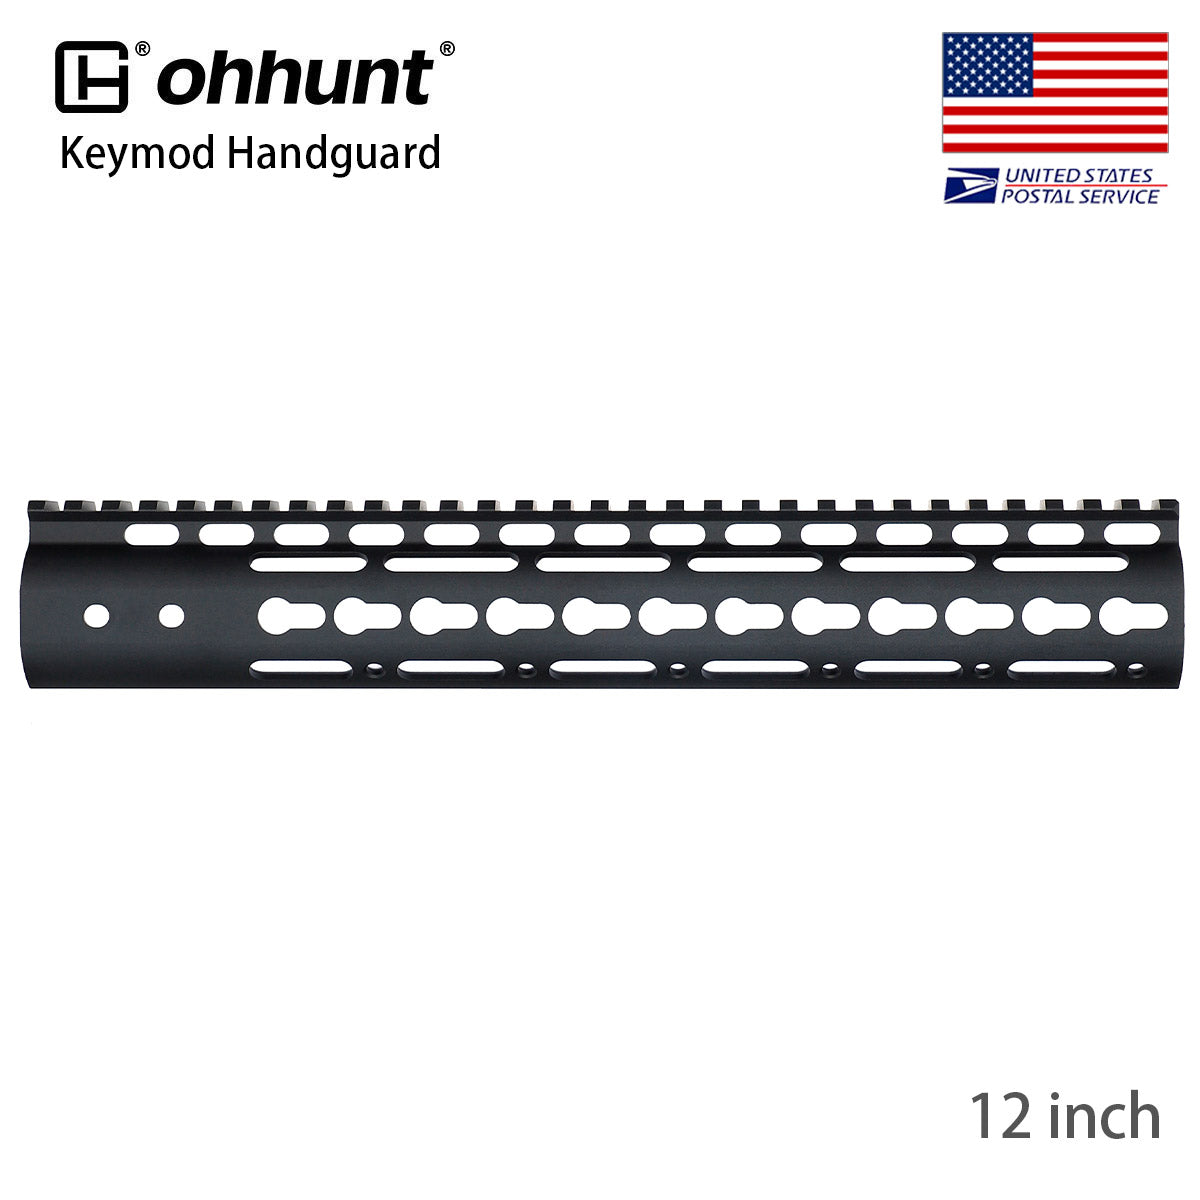 ohhunt AR-15 Free Float Keymod Handguard with Barrel Nut 7" 9" 10" 12" 13.5" 15" Handrail For 223/556